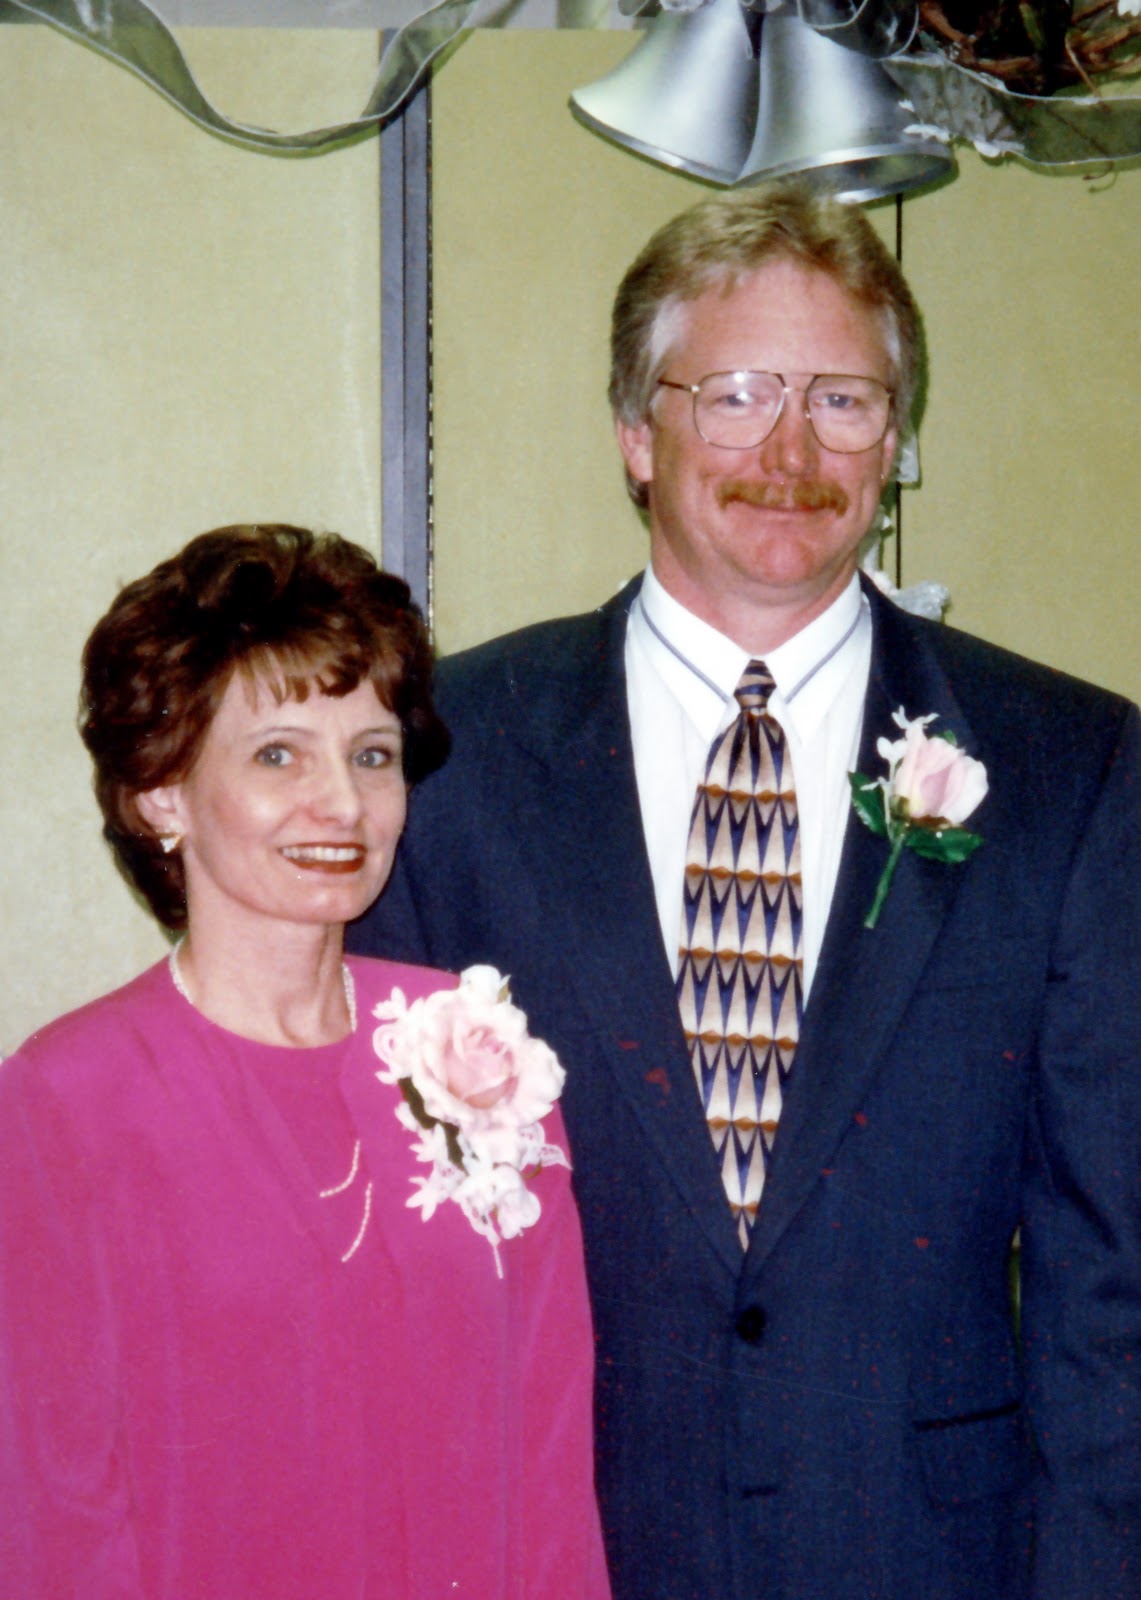 25th wedding anniversary